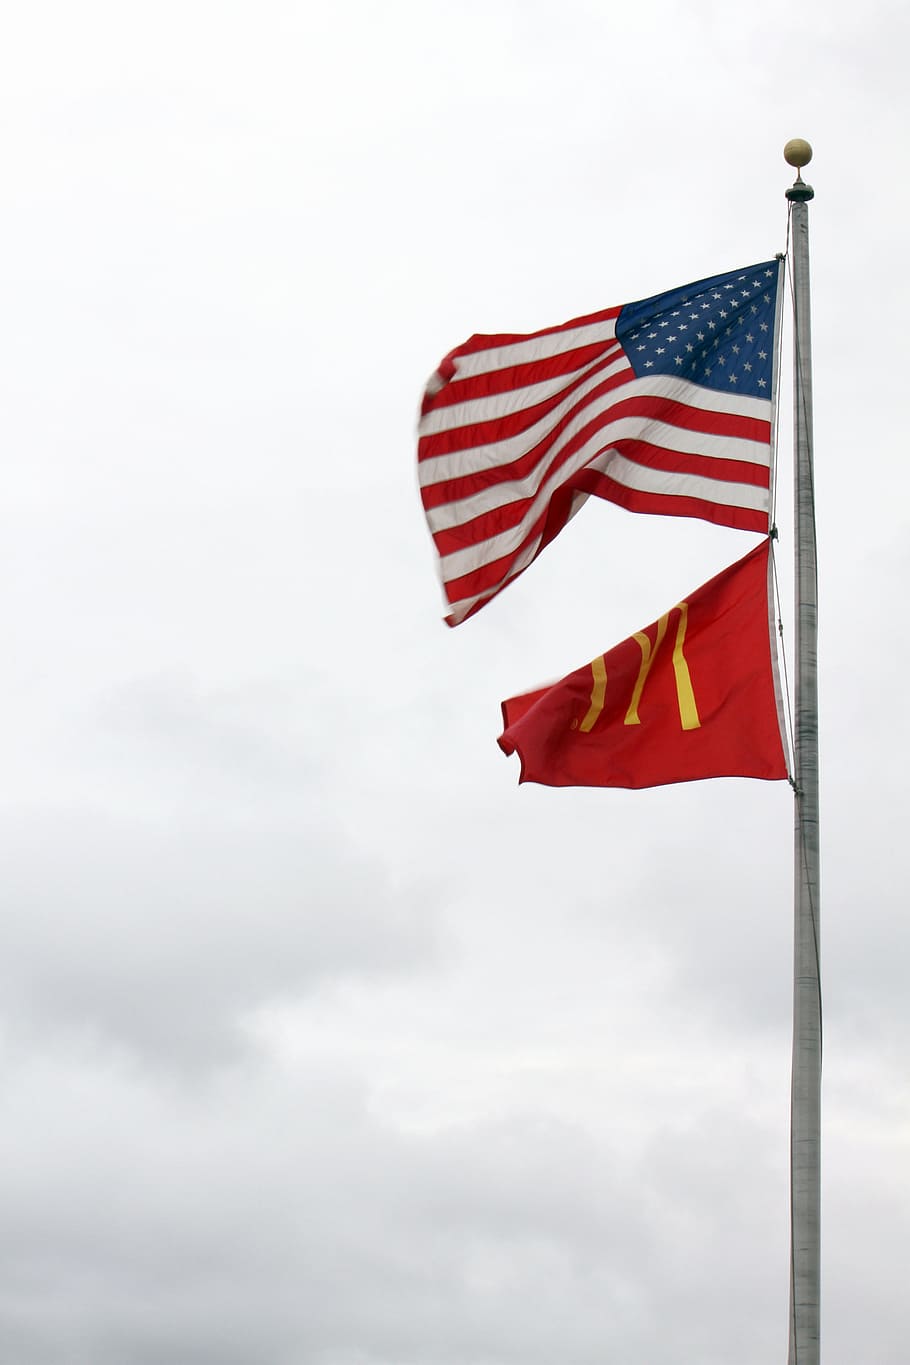 usa, mcdonald's, flags, symbols, america, sky, national, patriotic, globalization, state